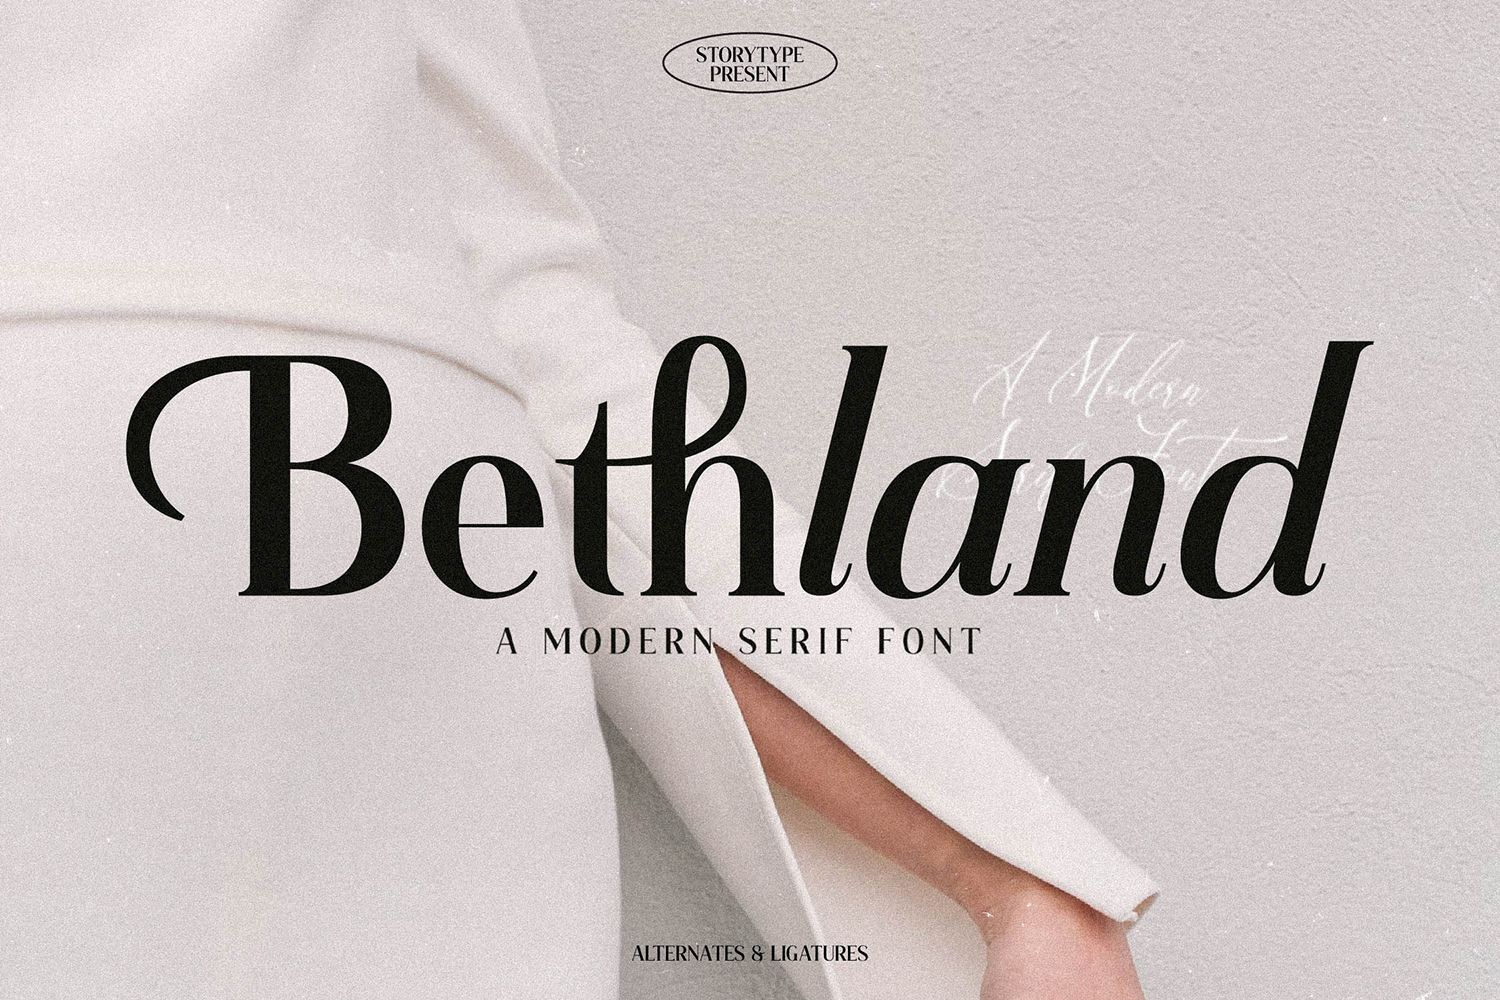 Bethland Free Font